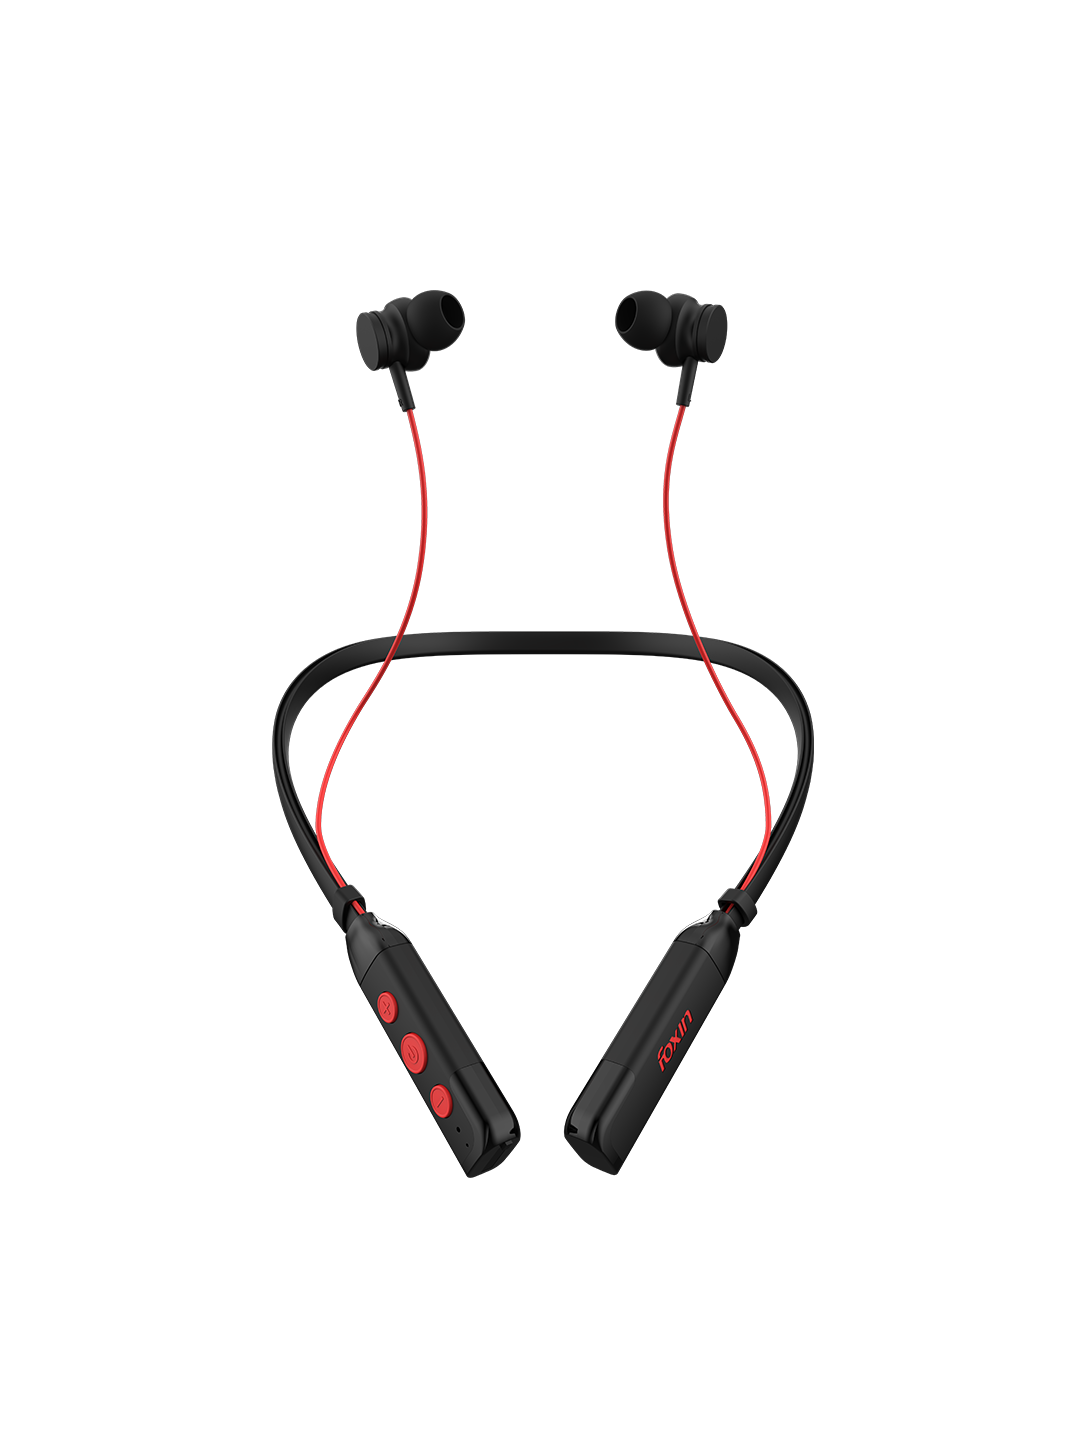 FoxBeat 111 Wireless Neckband//neckband earphones/Headsets/gaming headphone